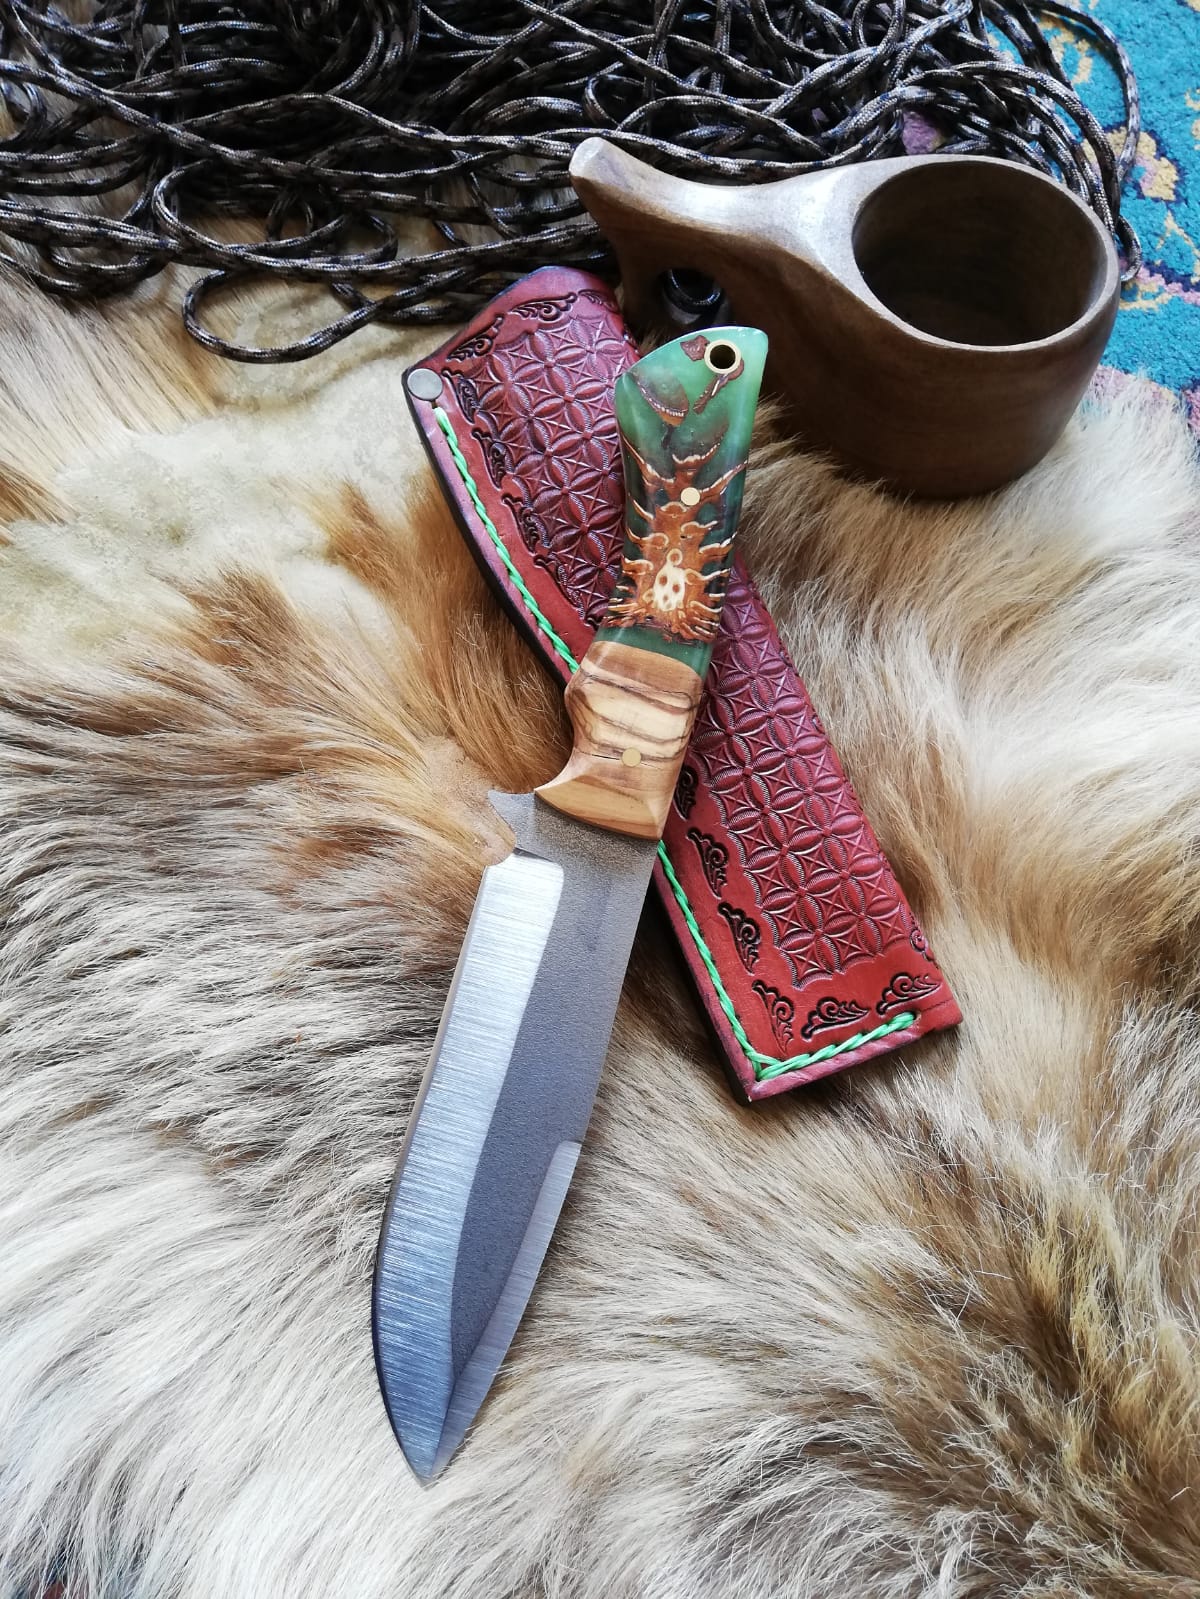 Handmade Knife Epoxy and Padauk Wood Handle